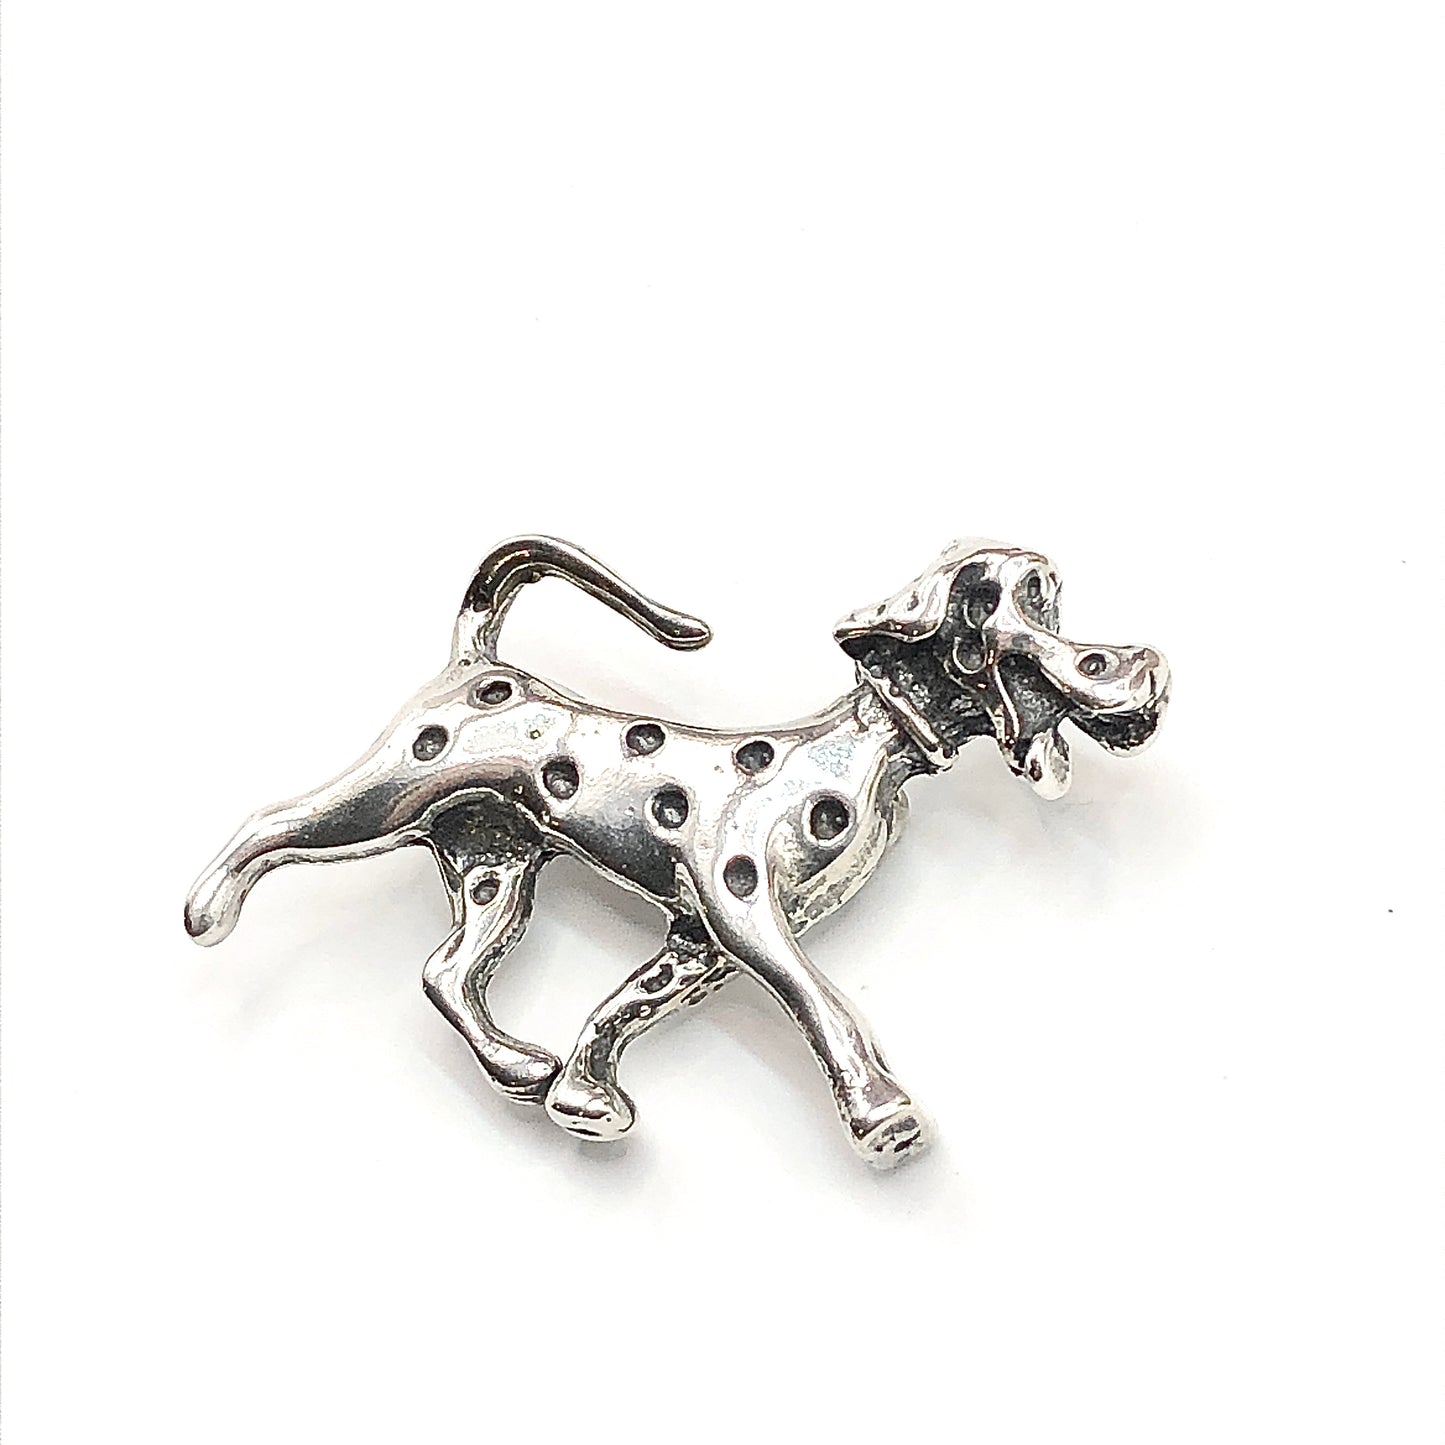 Mens Womens Sterling Silver Dopey Dalmatian Dog Brooch - Fireman's Friend Pin - Cartoon Style